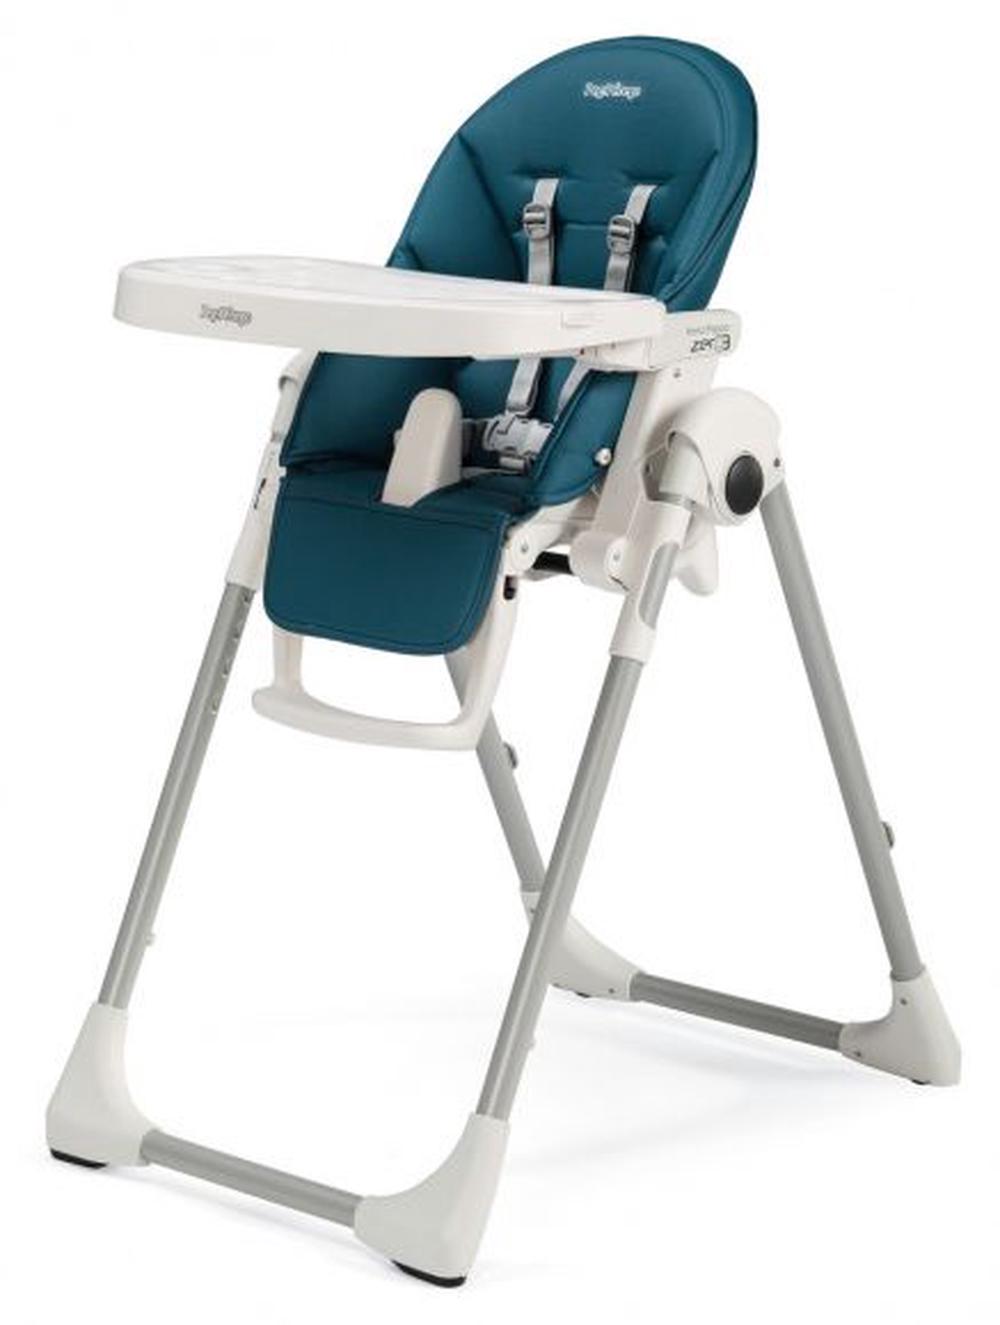 PegPerego Adjustable Prima Pappa Zero3 High Chair